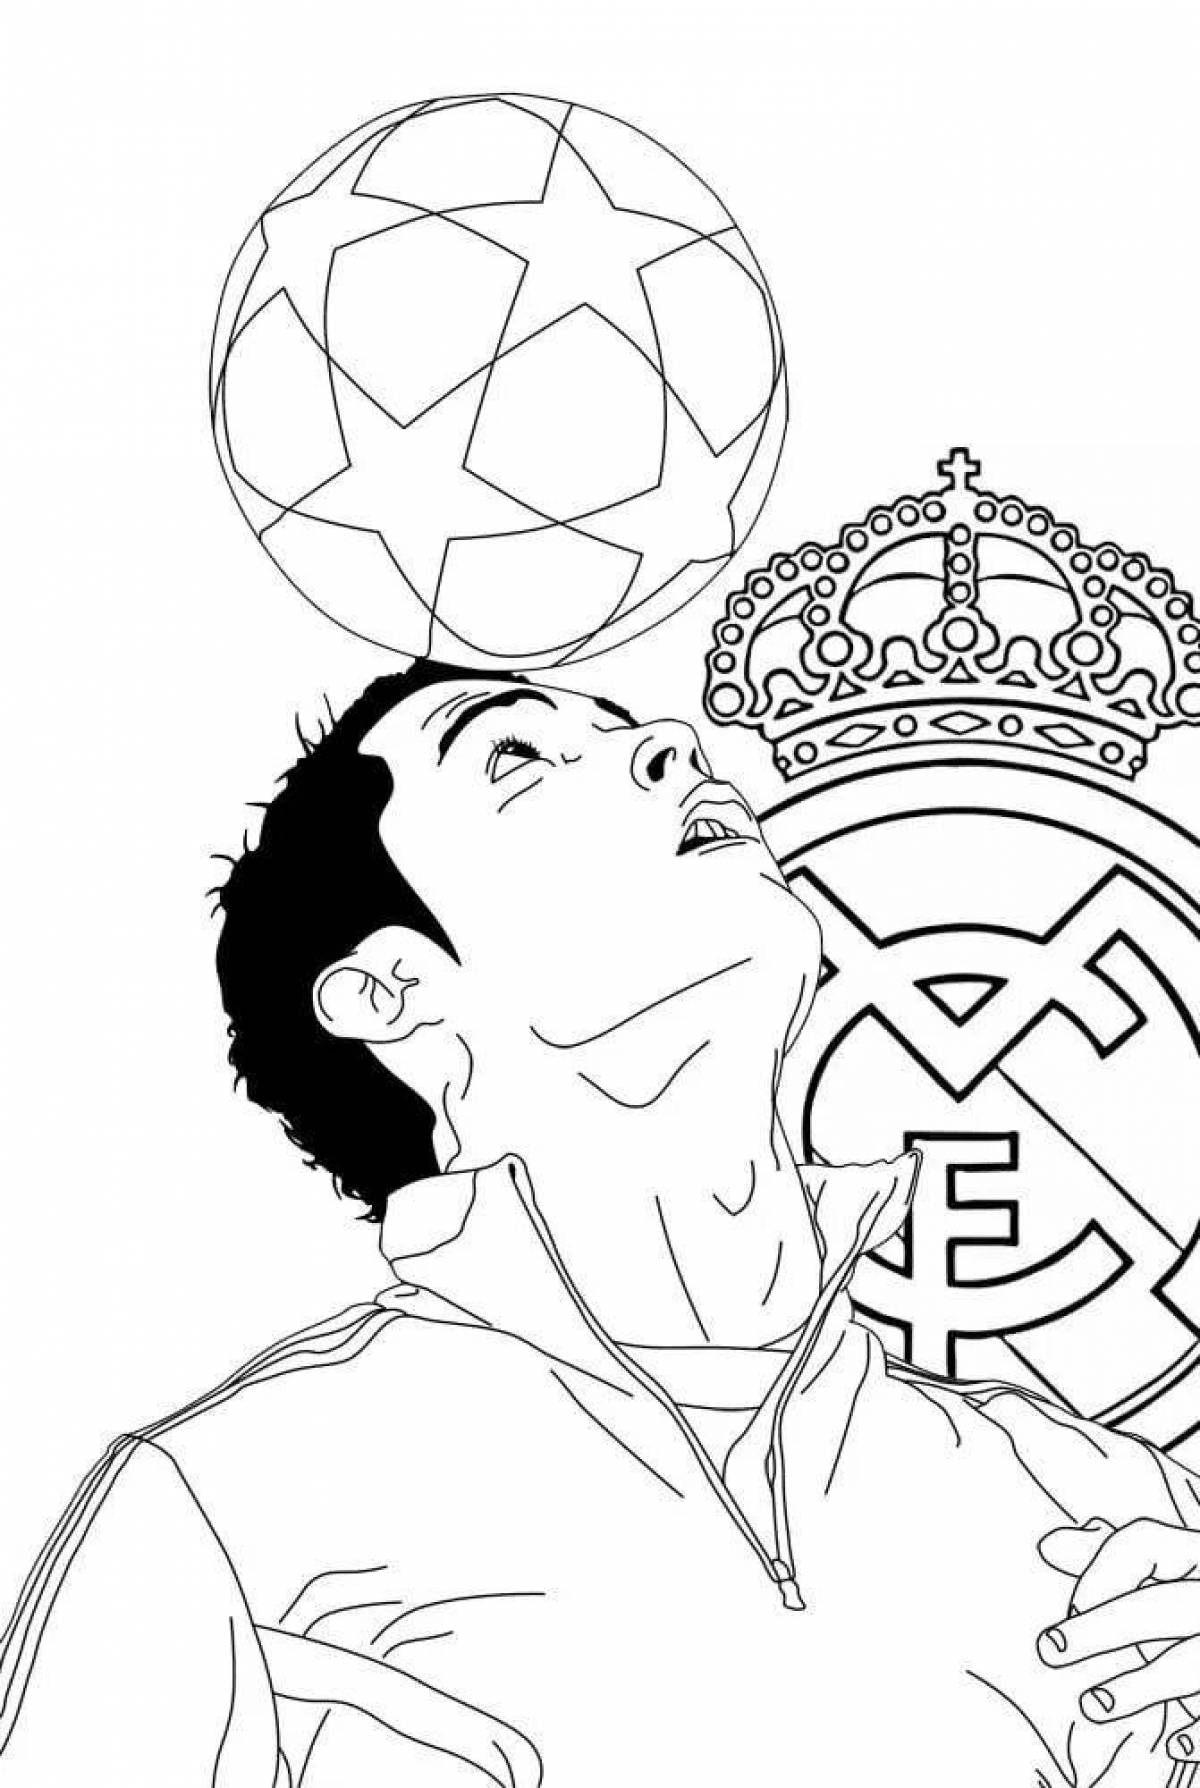 Картинка эмблема ФК Реал Мадрид